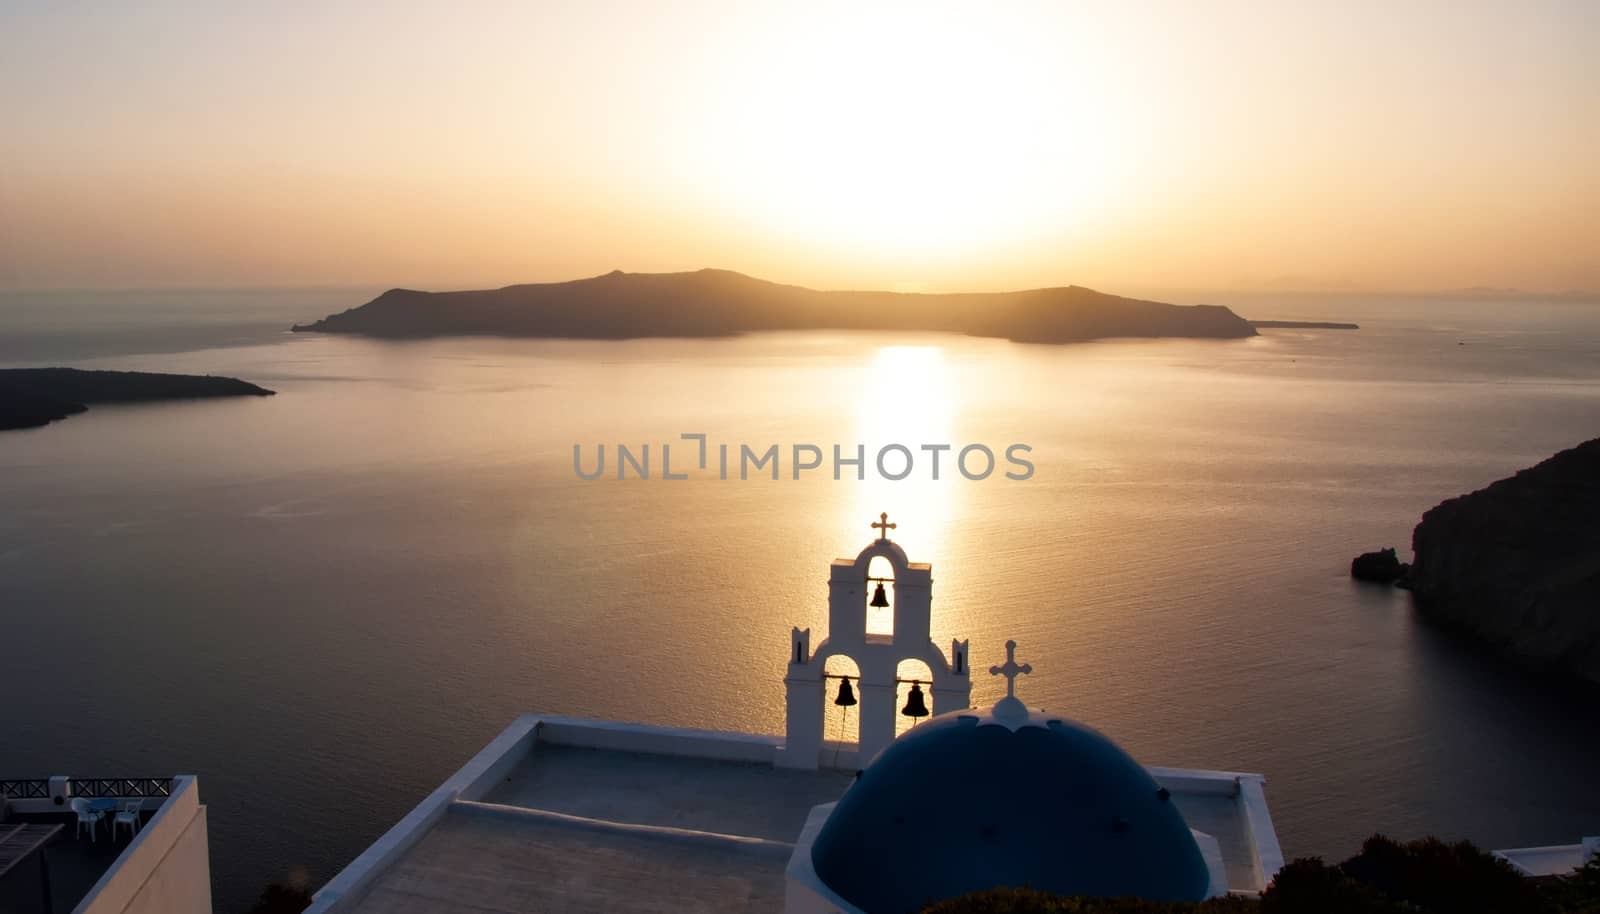 Sunset over the Aegean Sea, Oia, Santorini, Greece by mitakag